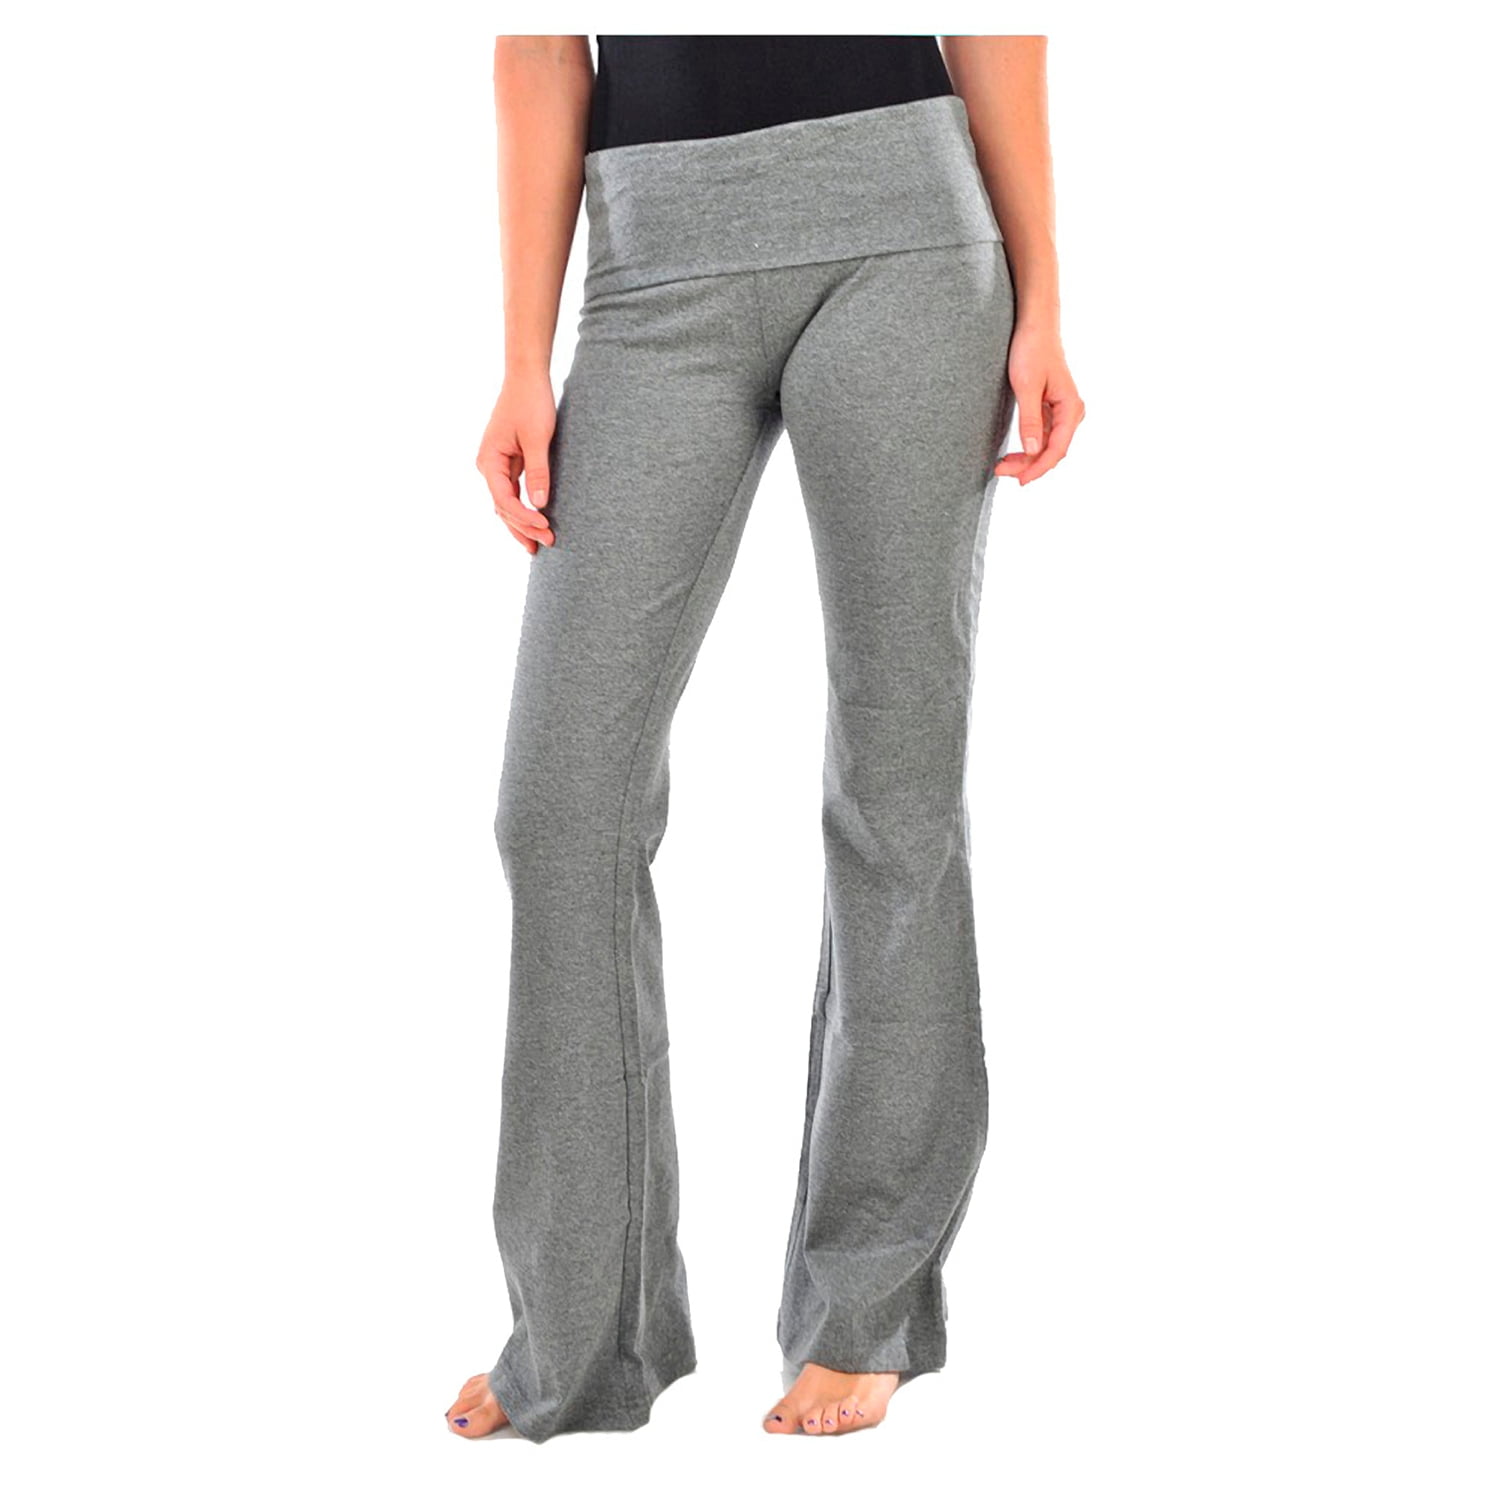 Ladies Yoga Pants -YP1000 | Walmart Canada